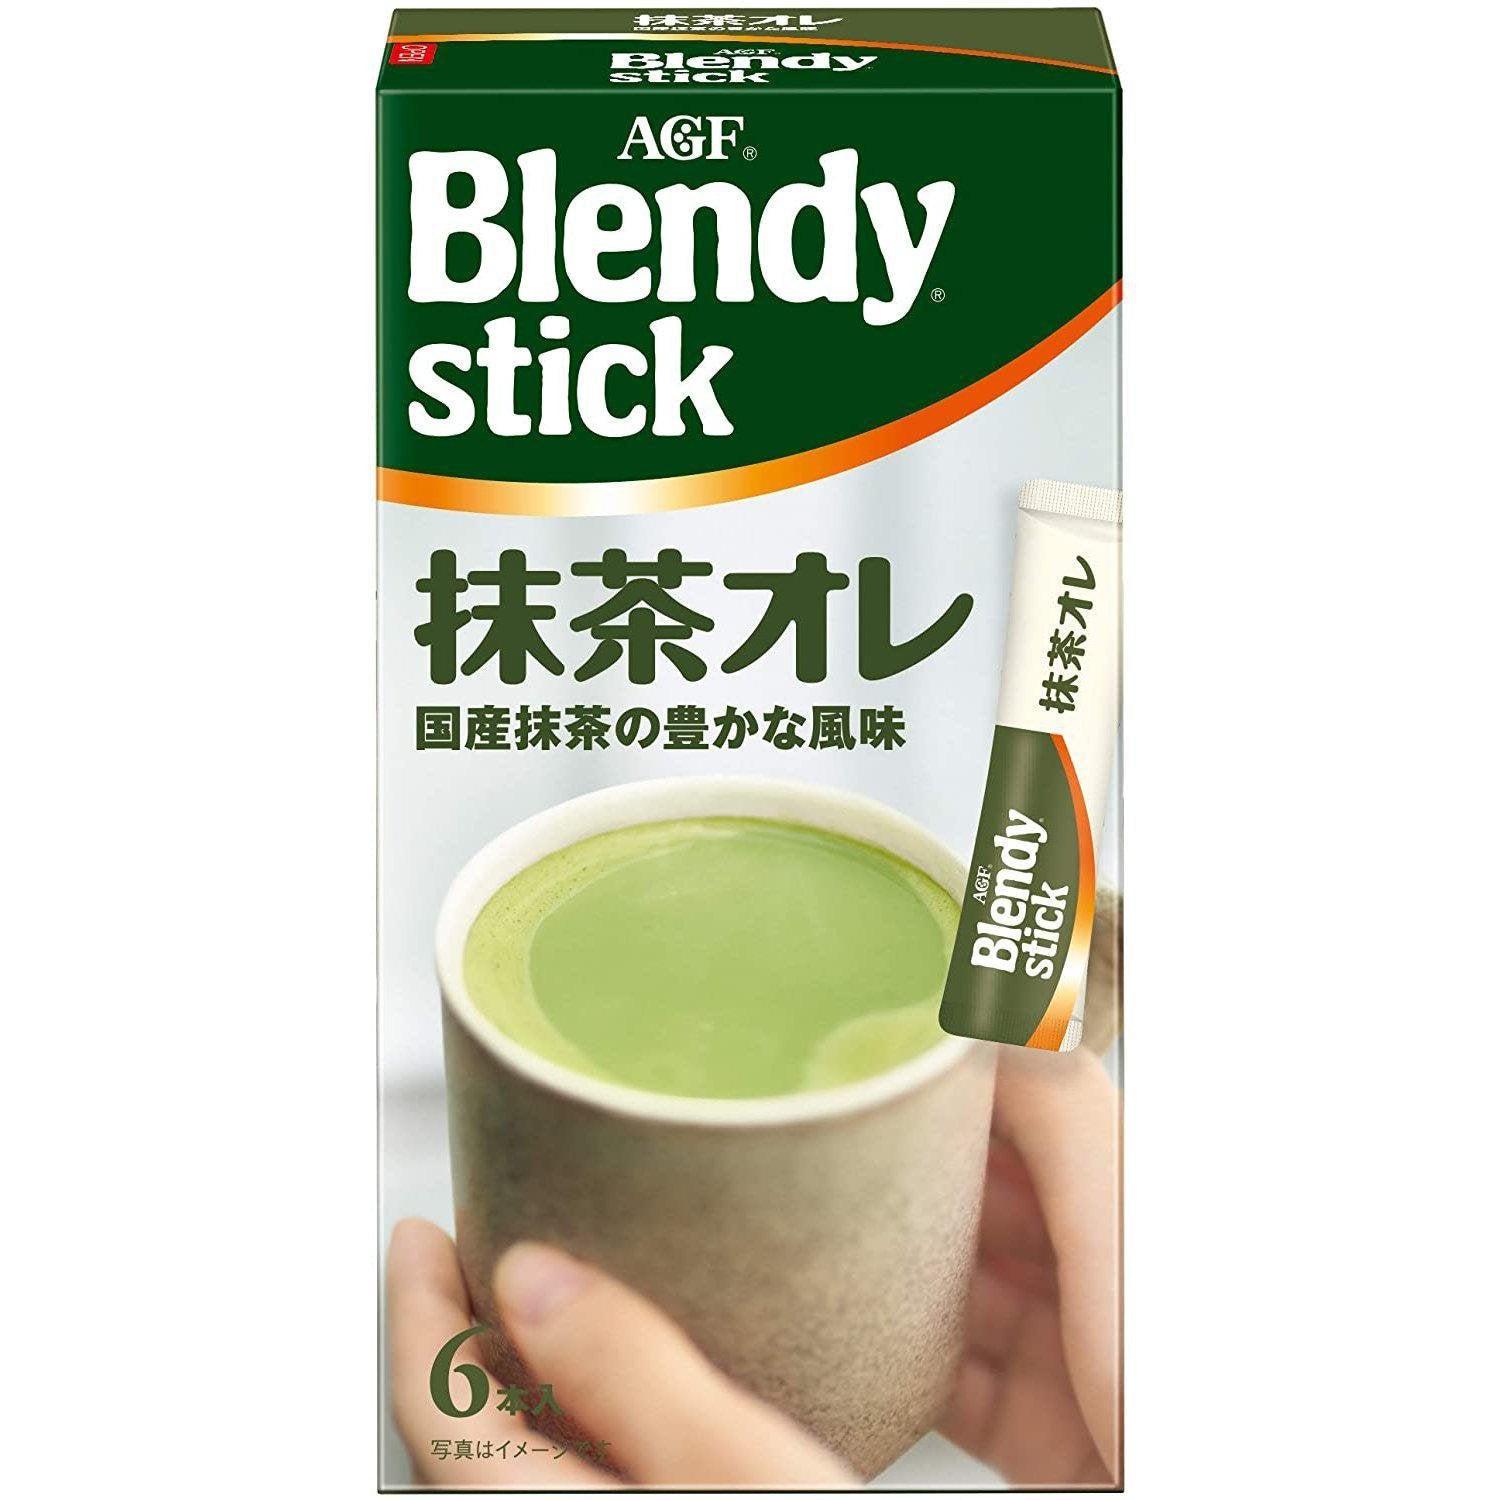 AGF Blendy Stick Matcha Au Lait Green Tea Latte 6 Sticks